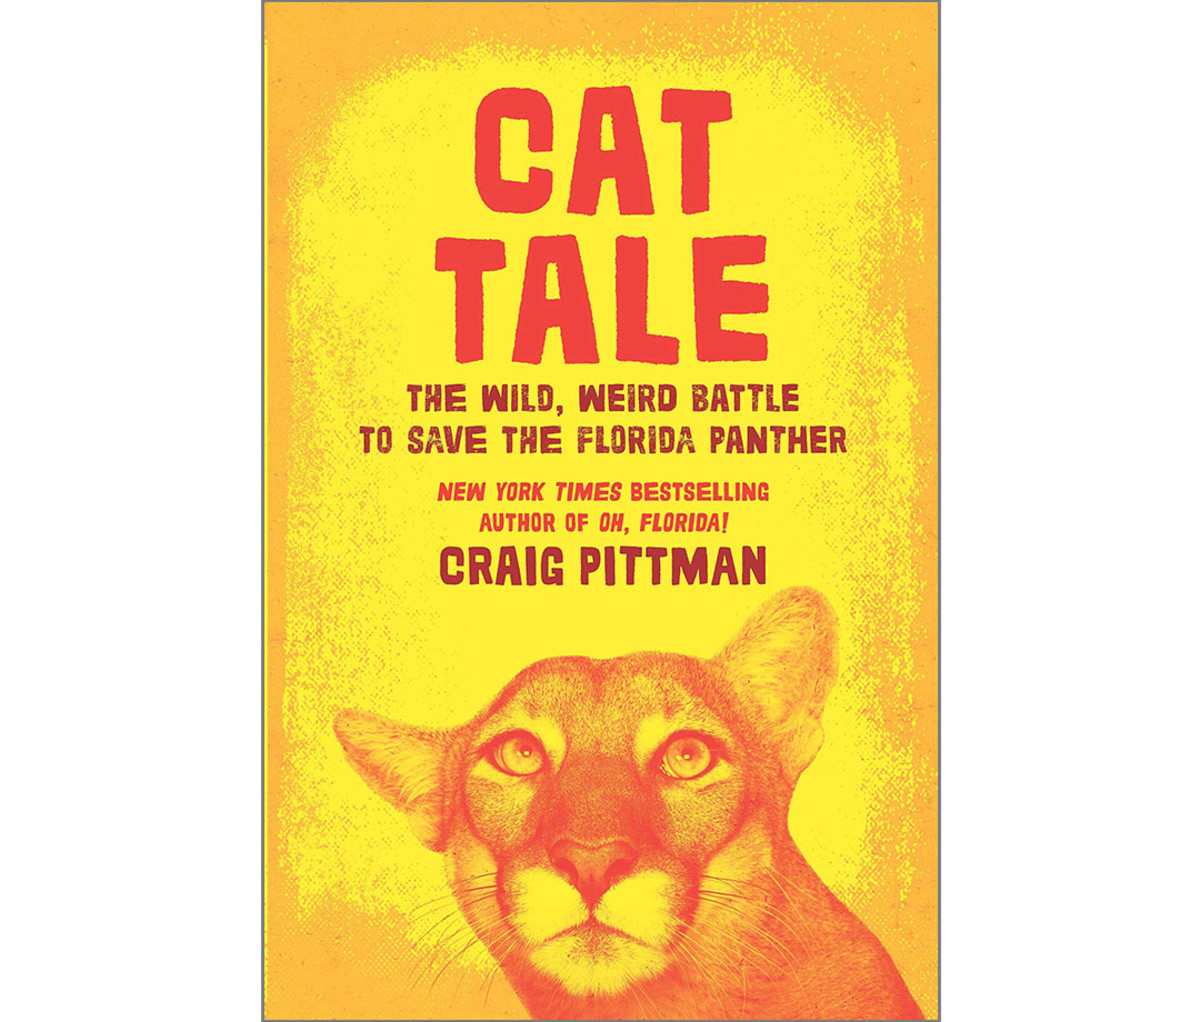 "Cat Tale" by Craig Pittman; must-read books